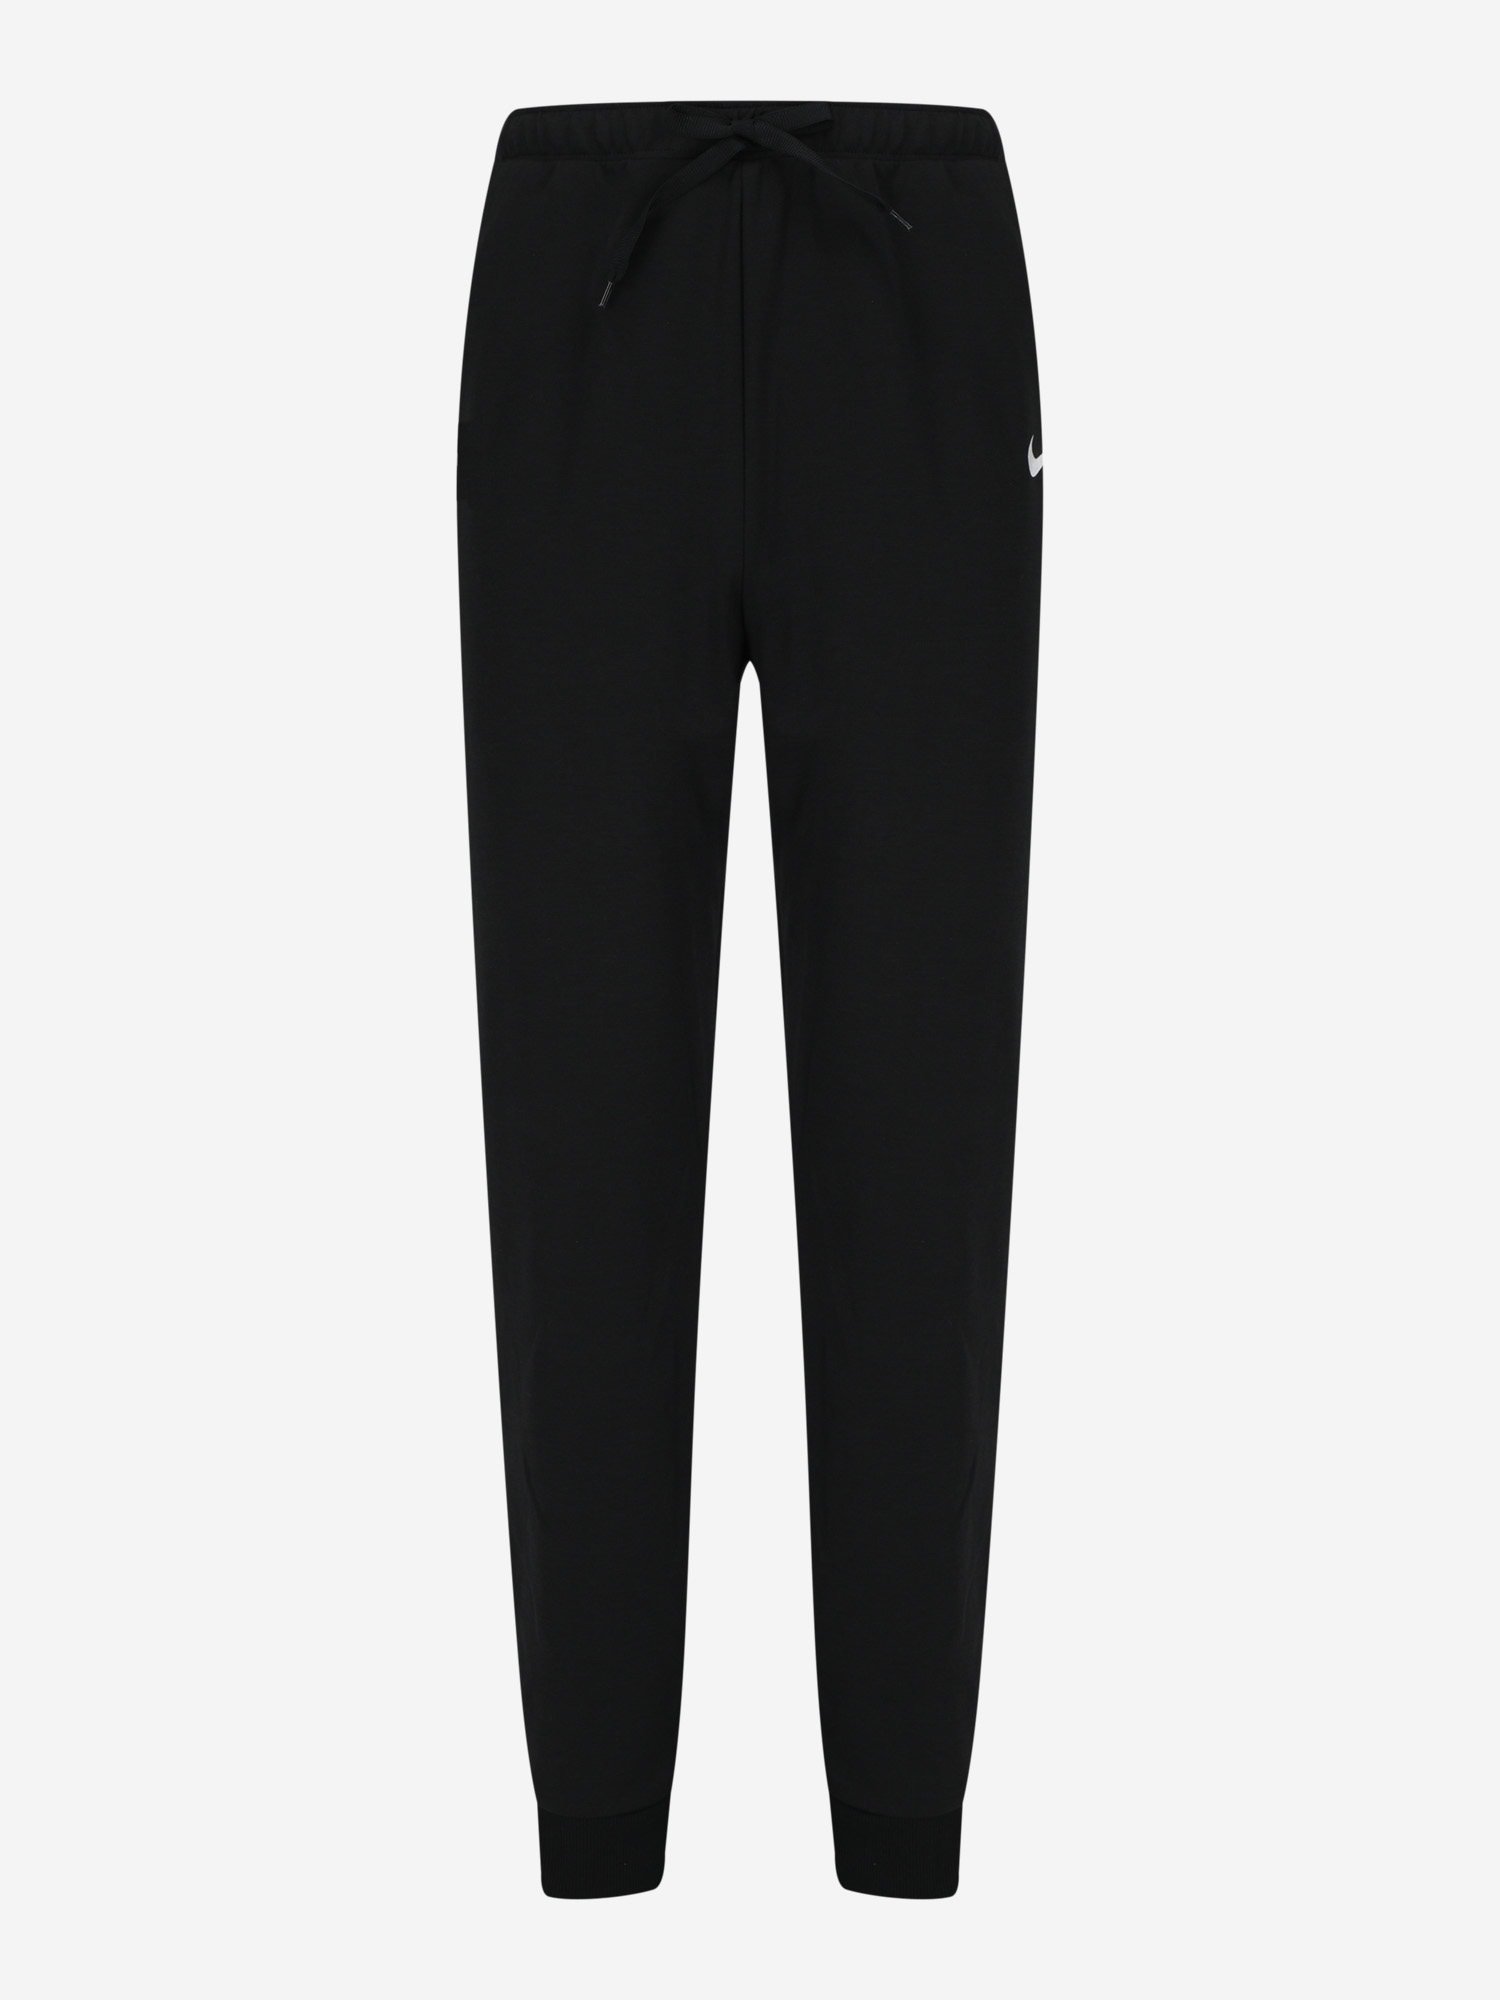 Брюки мужские Nike Training Pant Strike, Черный брюки для мальчиков nike kids training pant park 20 knit pant мульти